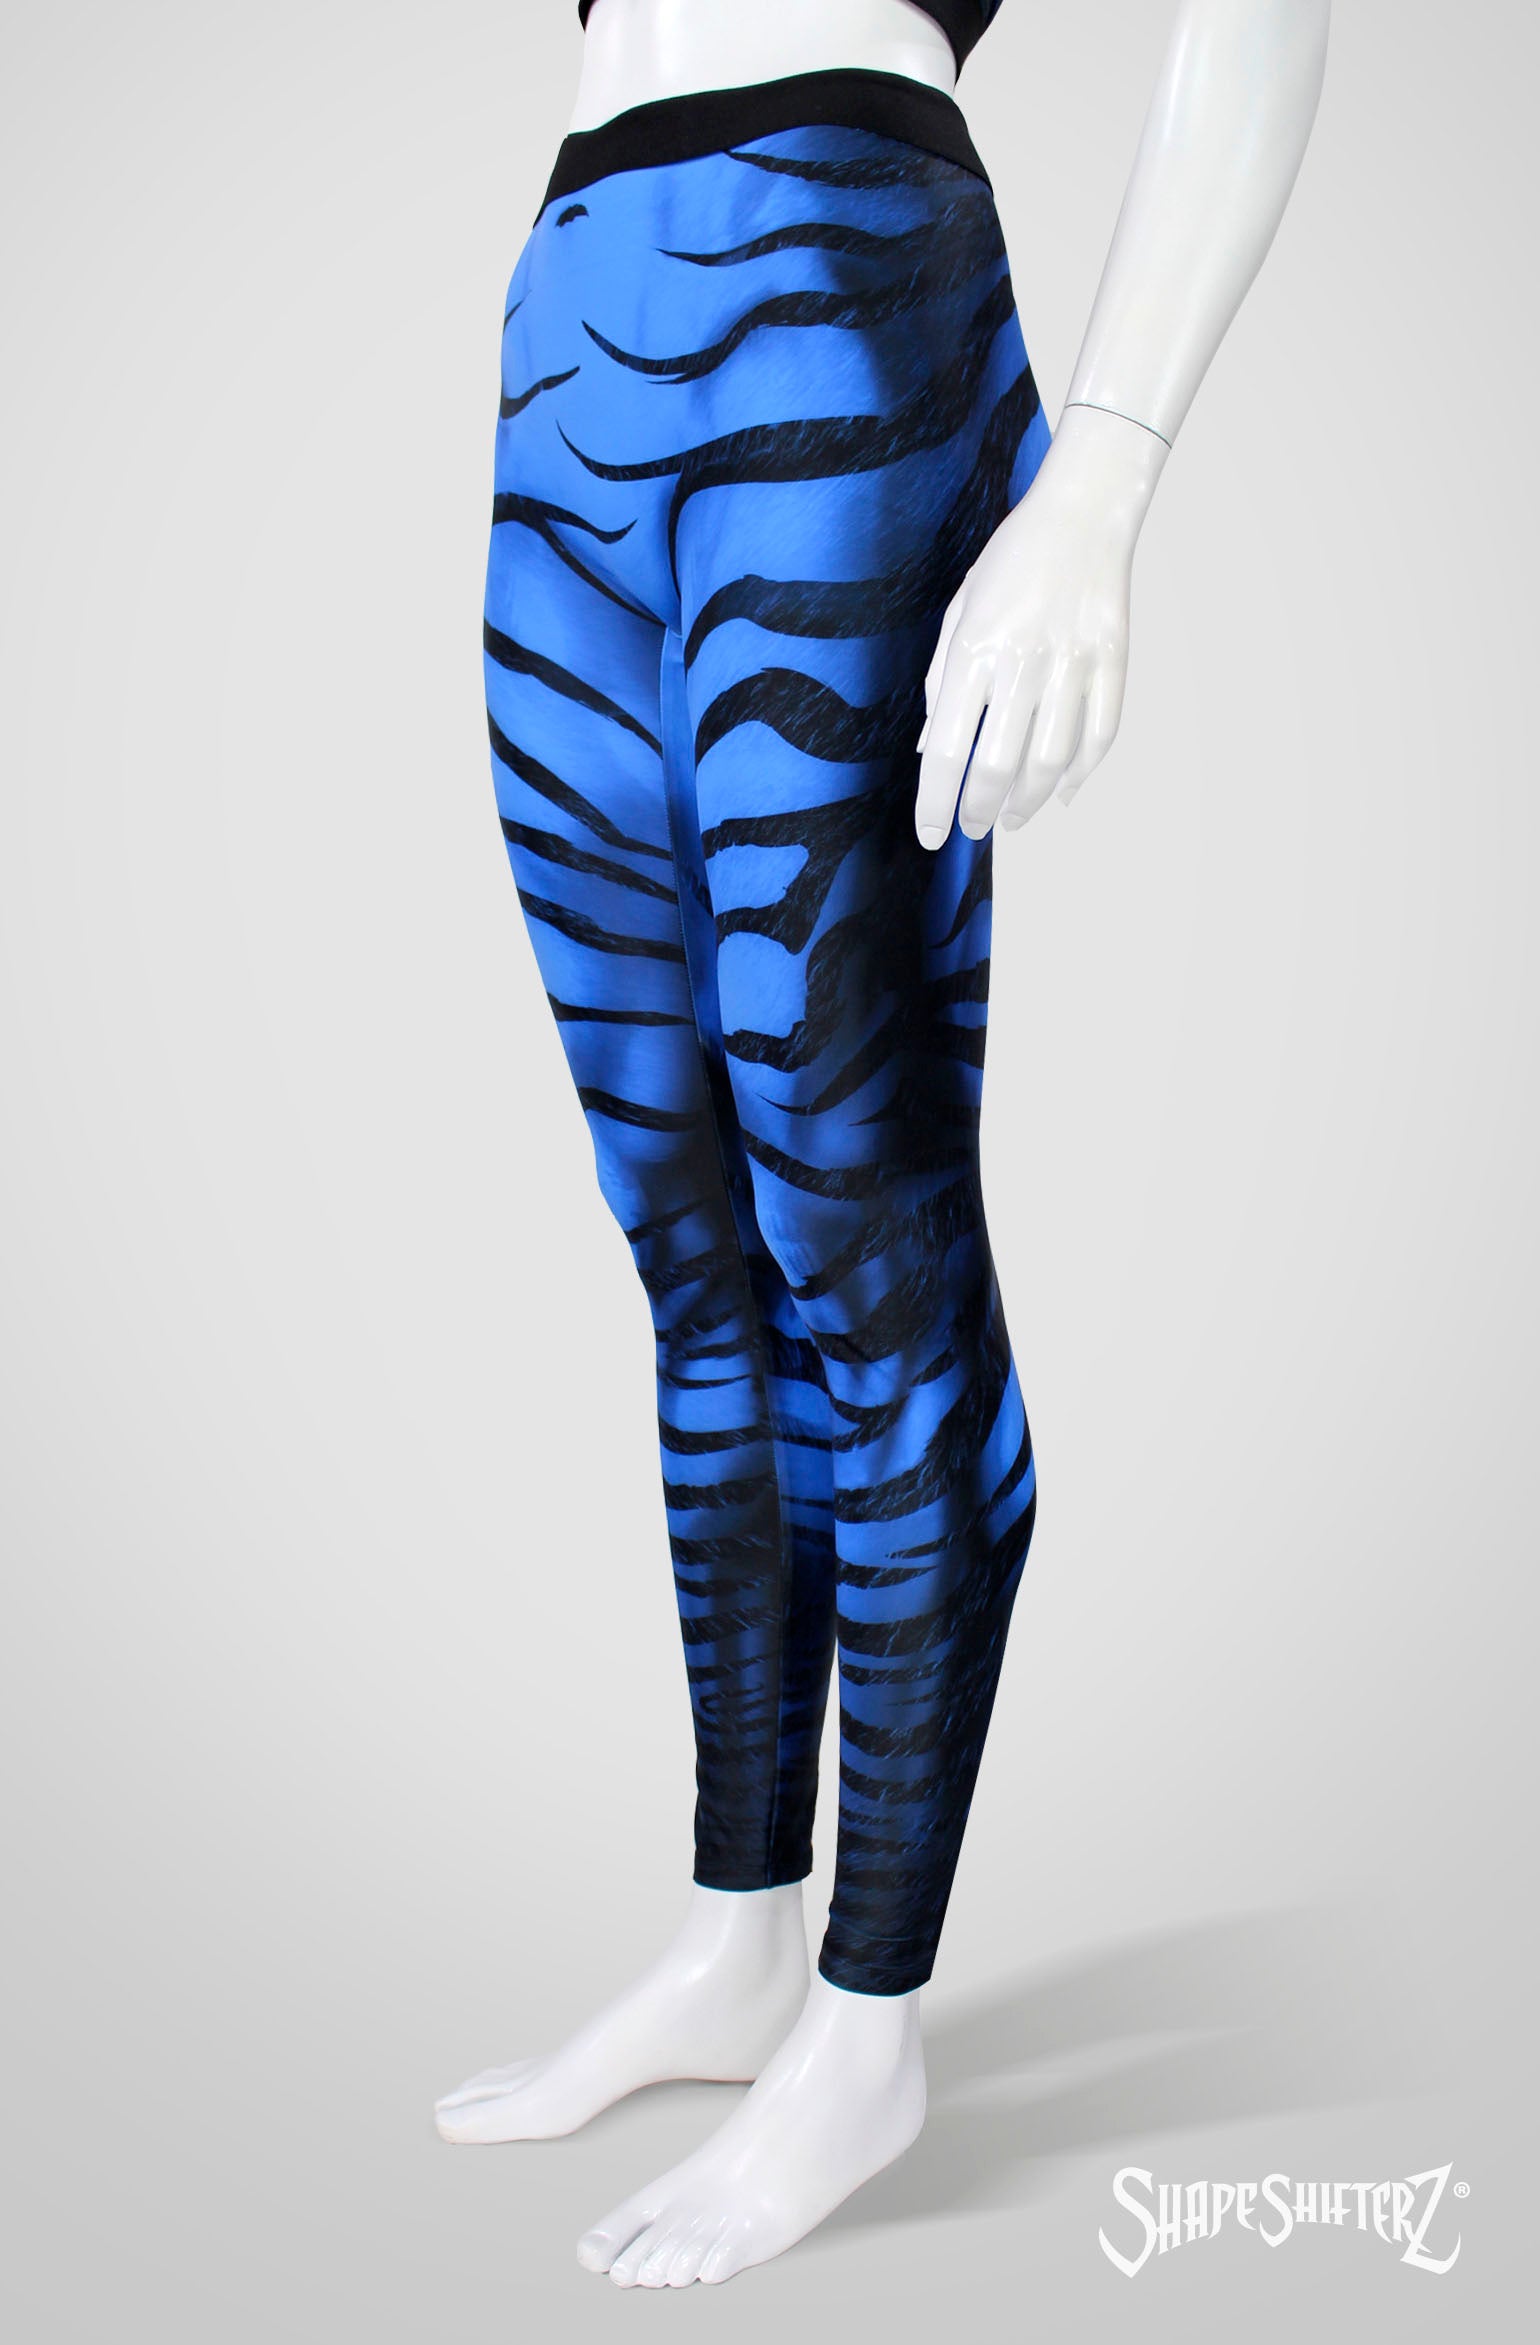 Women's Sport Outfit: Double-face top + Zebra leggings